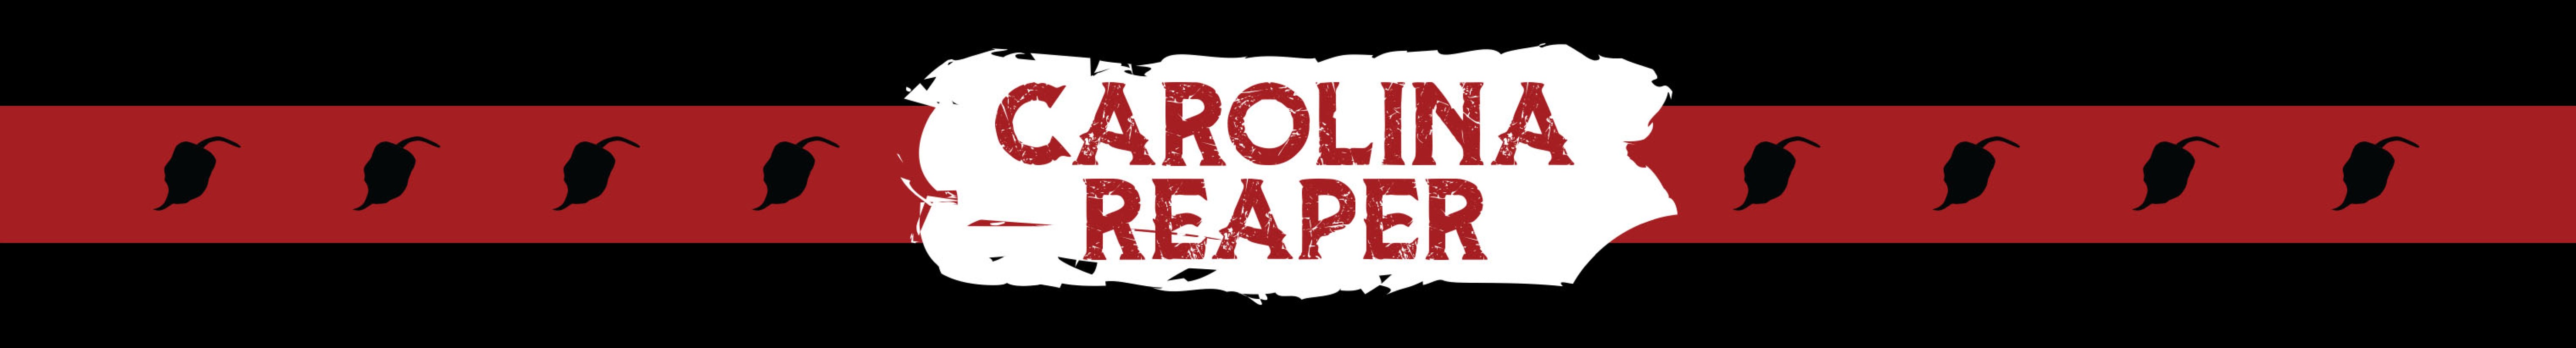 Red Hot Carolina Reaper Paste 245g | Indian Hot